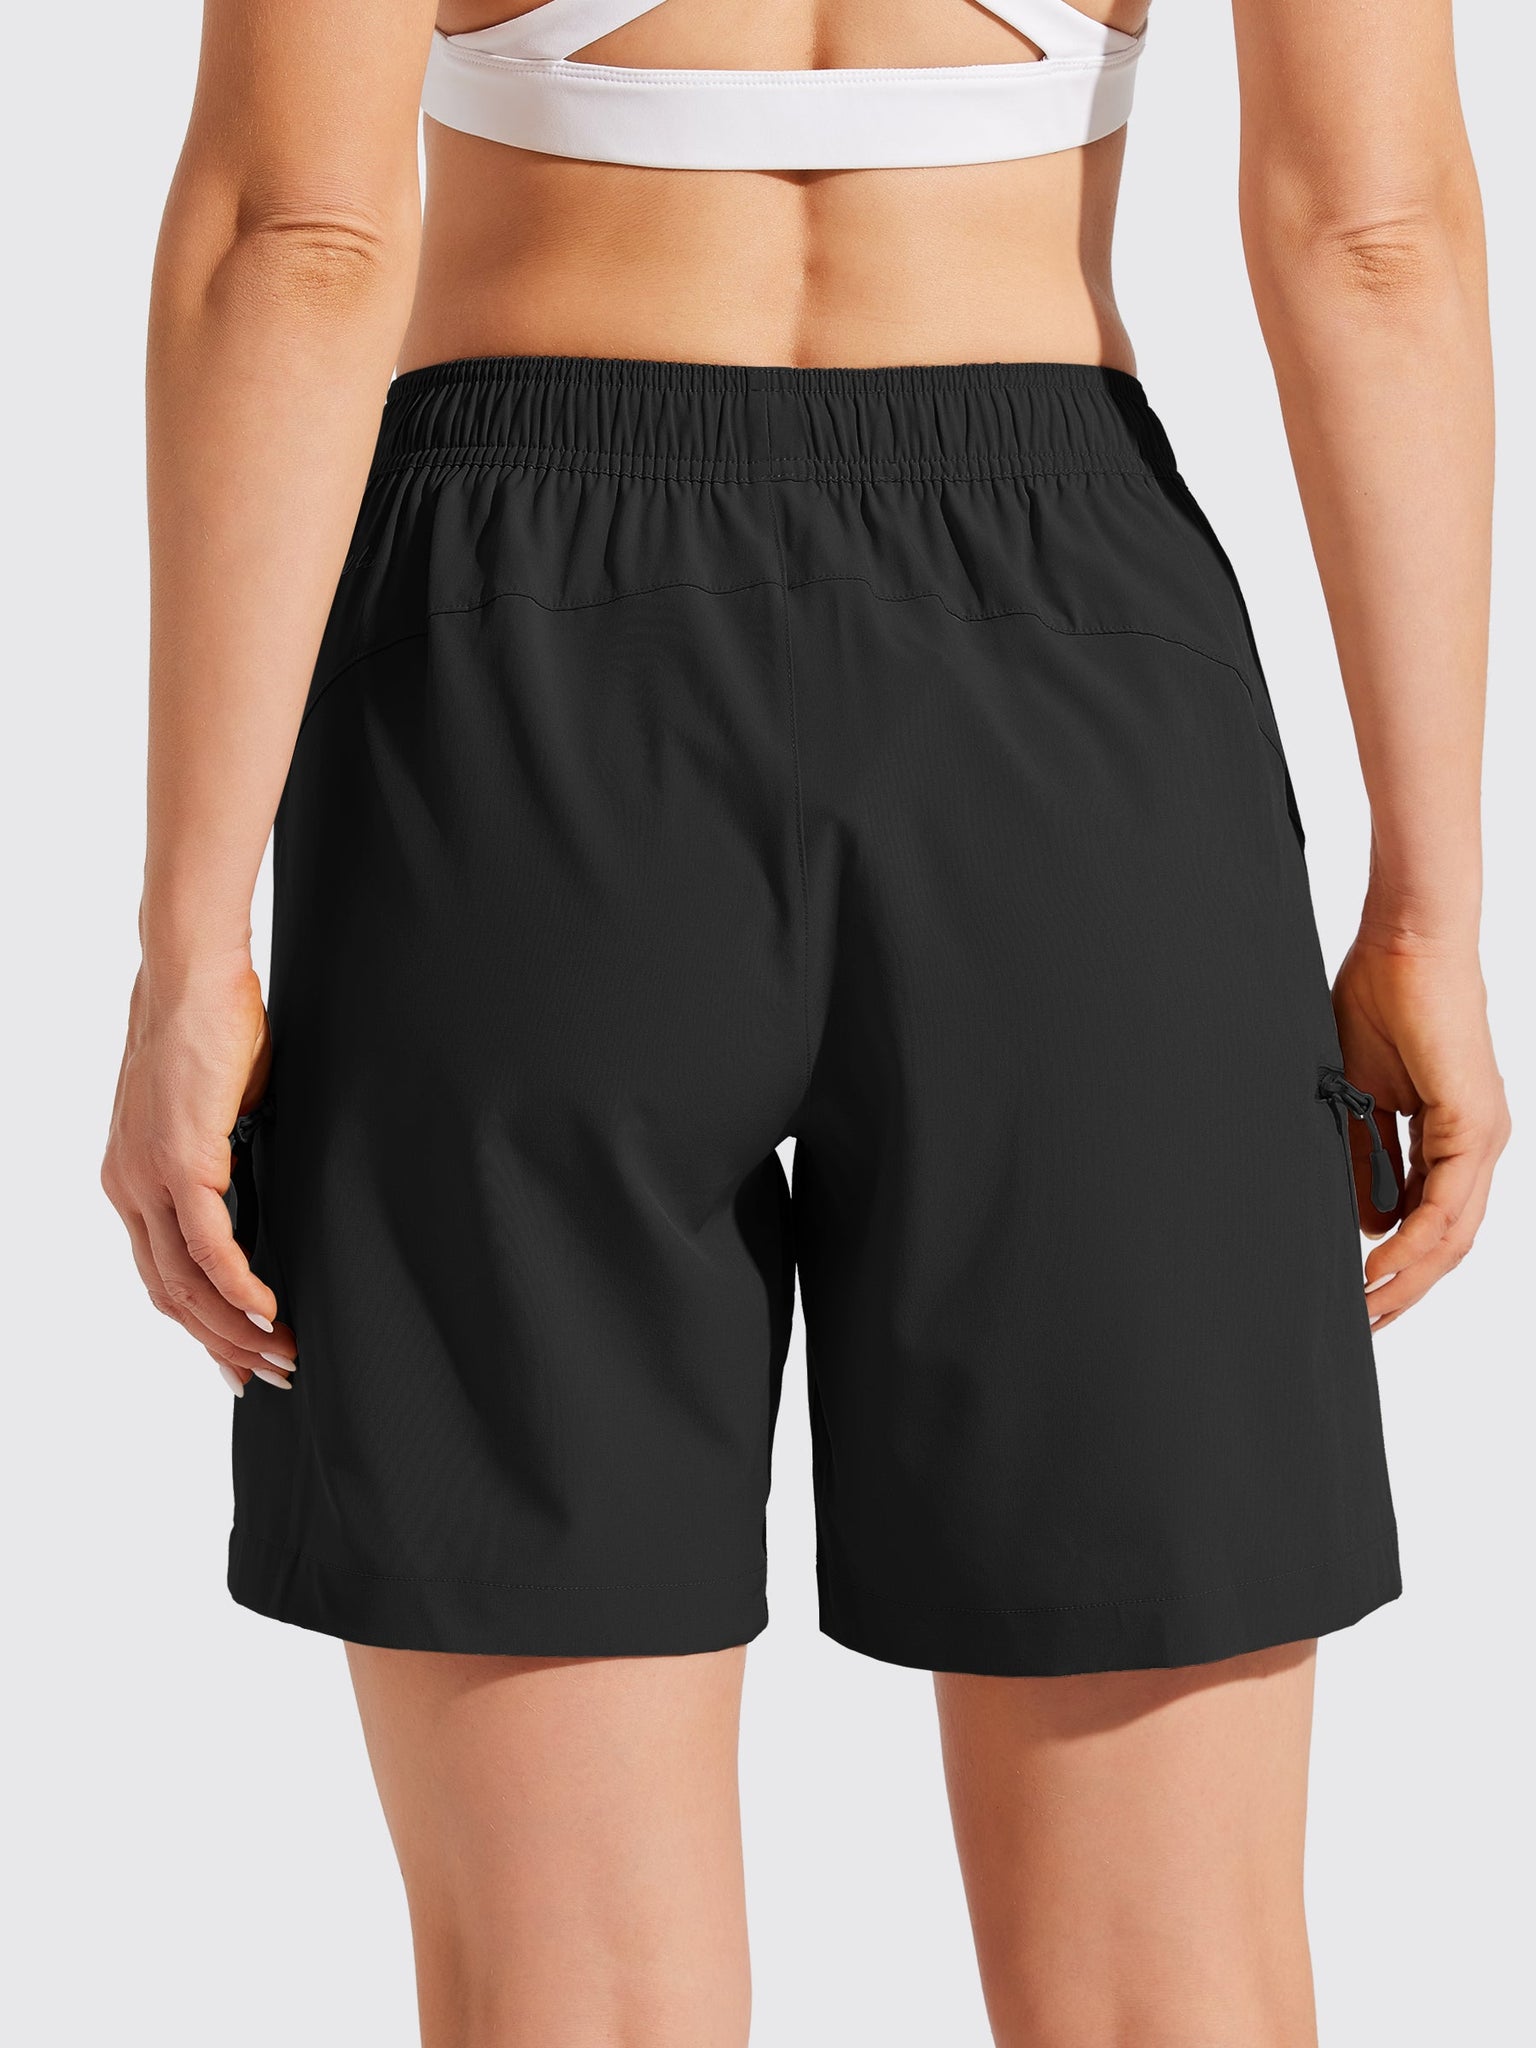 Women's Hiking Athletic Shorts_Black3